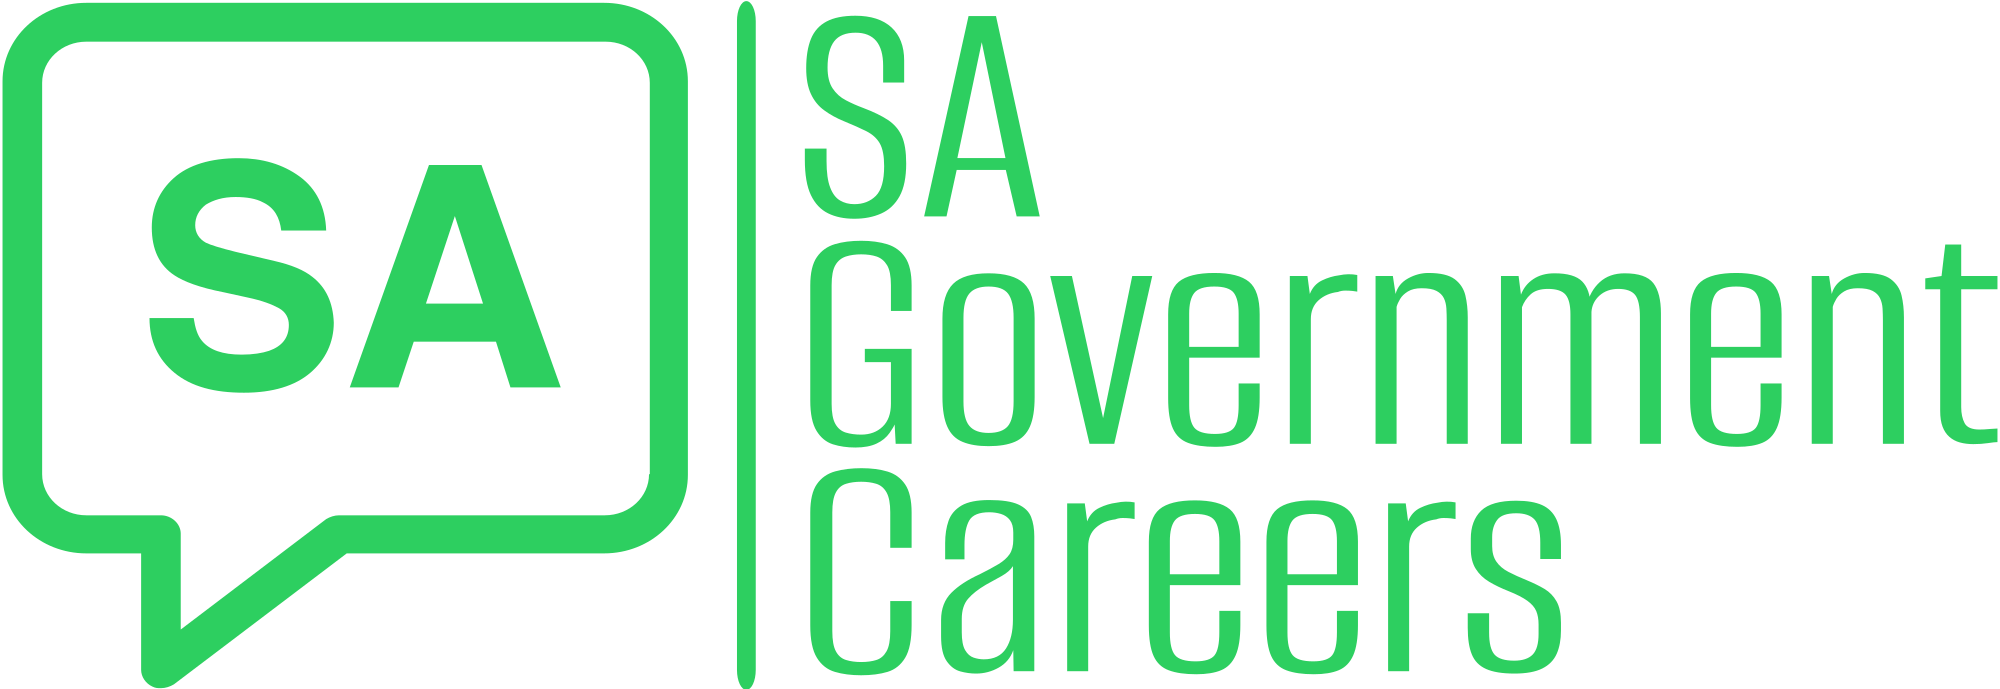 https://zagovernmentcareers.co.za/ SA Government Vacancies